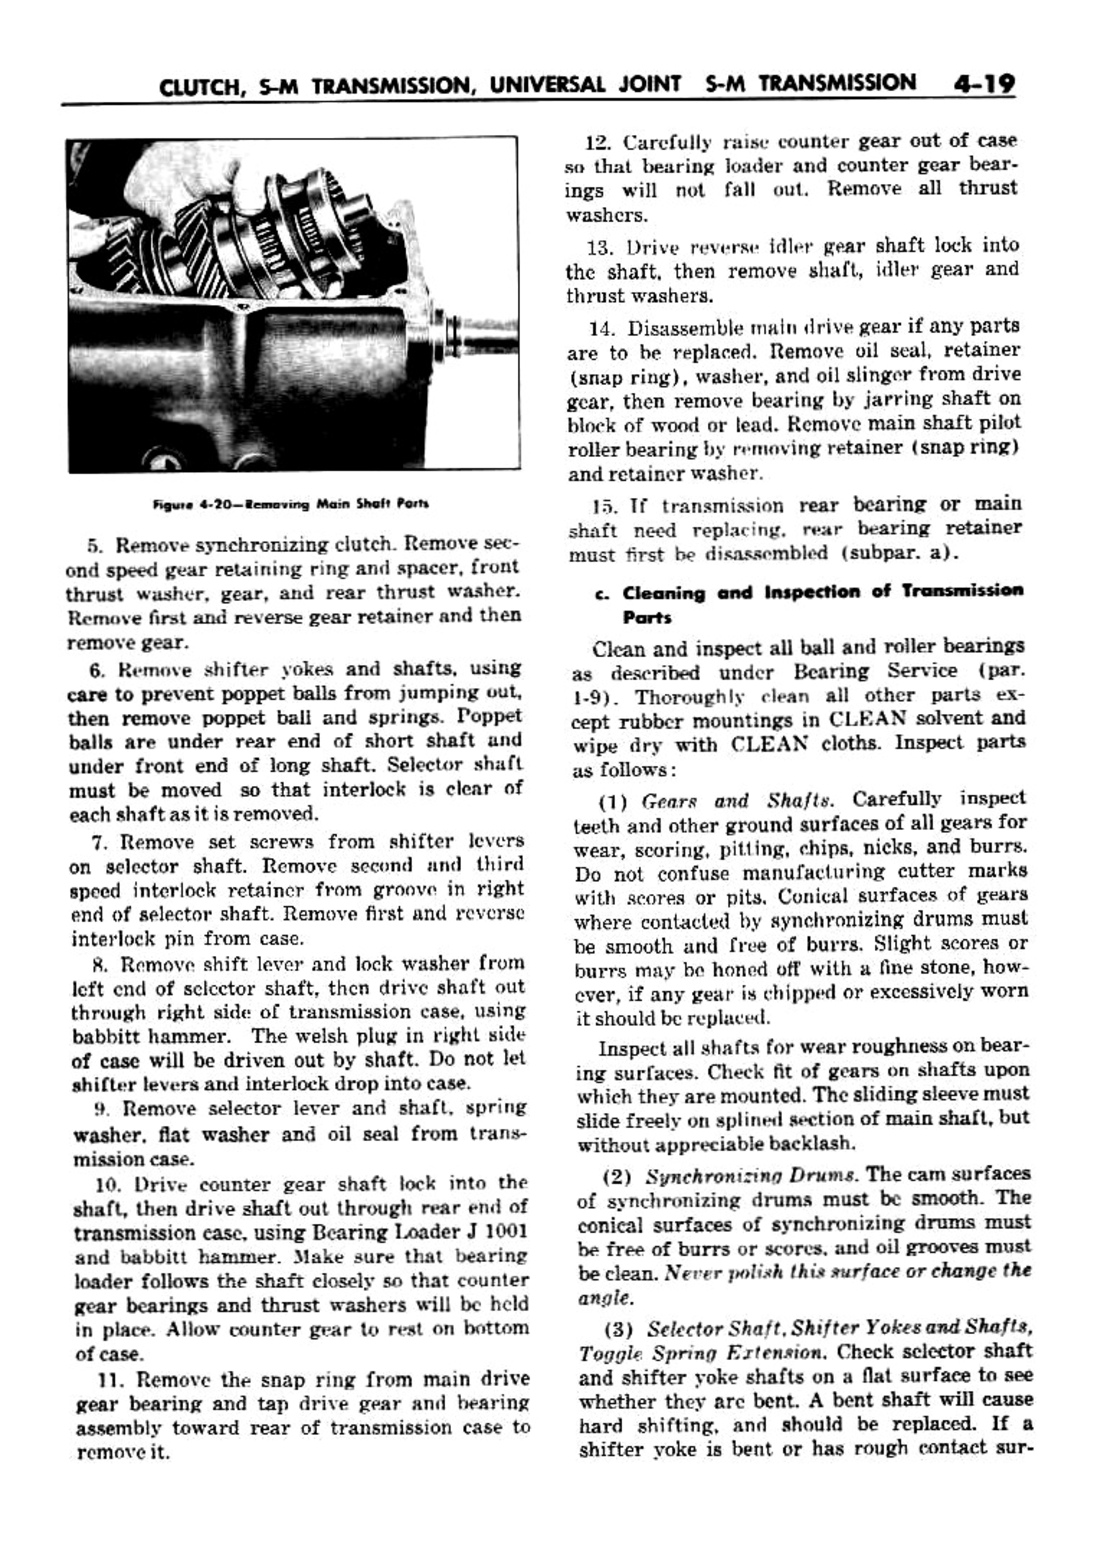 n_05 1959 Buick Shop Manual - Clutch & Man Trans-019-019.jpg